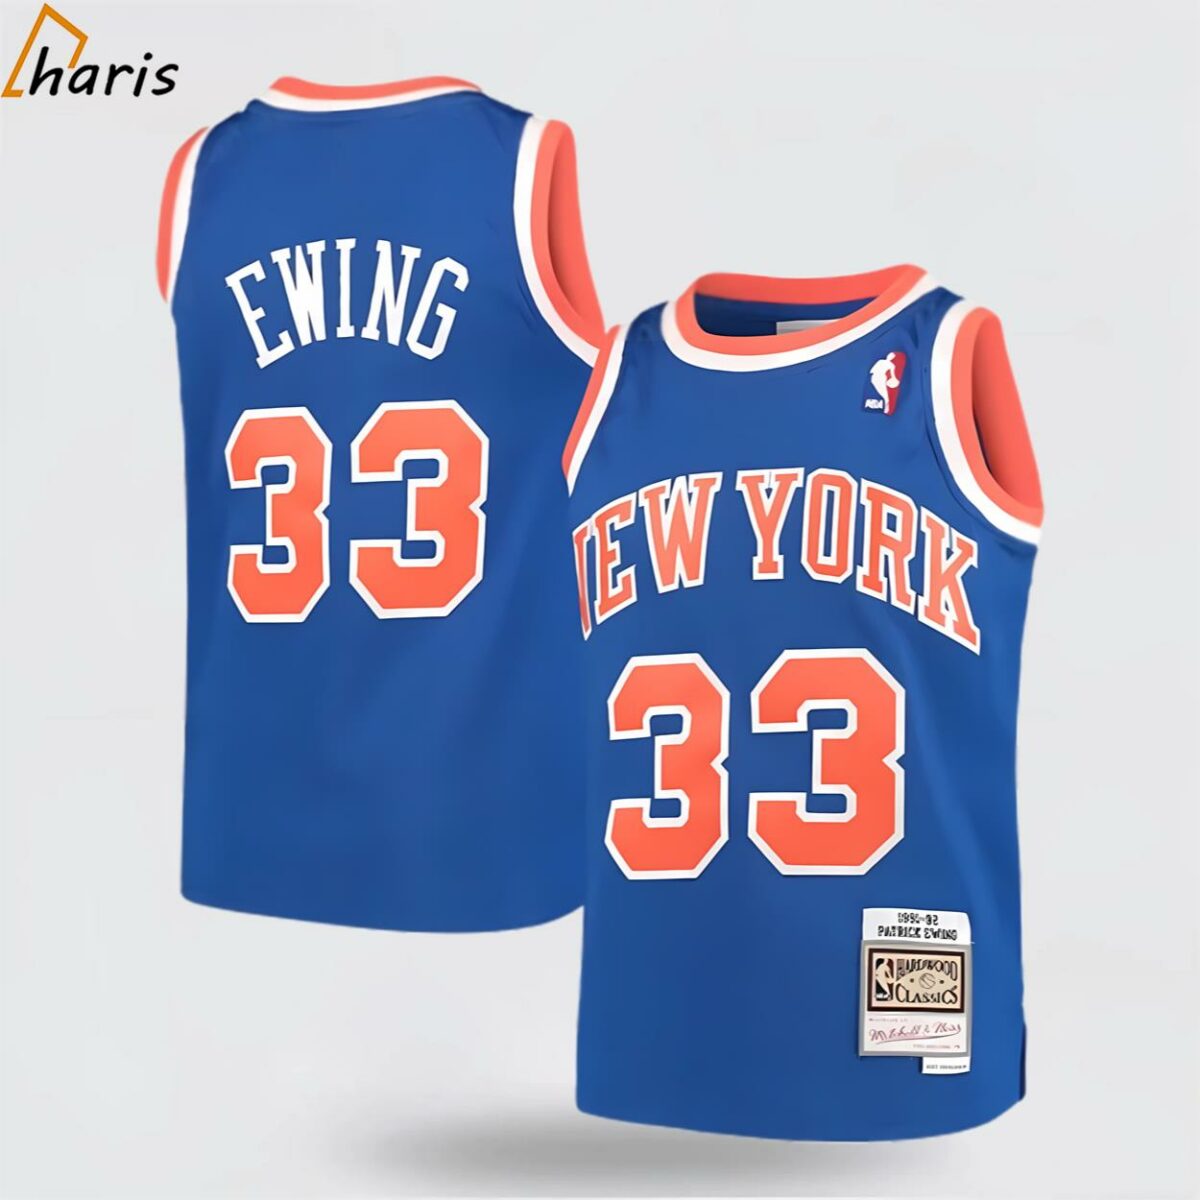 Patrick Ewing New York Knicks Swingman Throwback Jersey 1 jersey